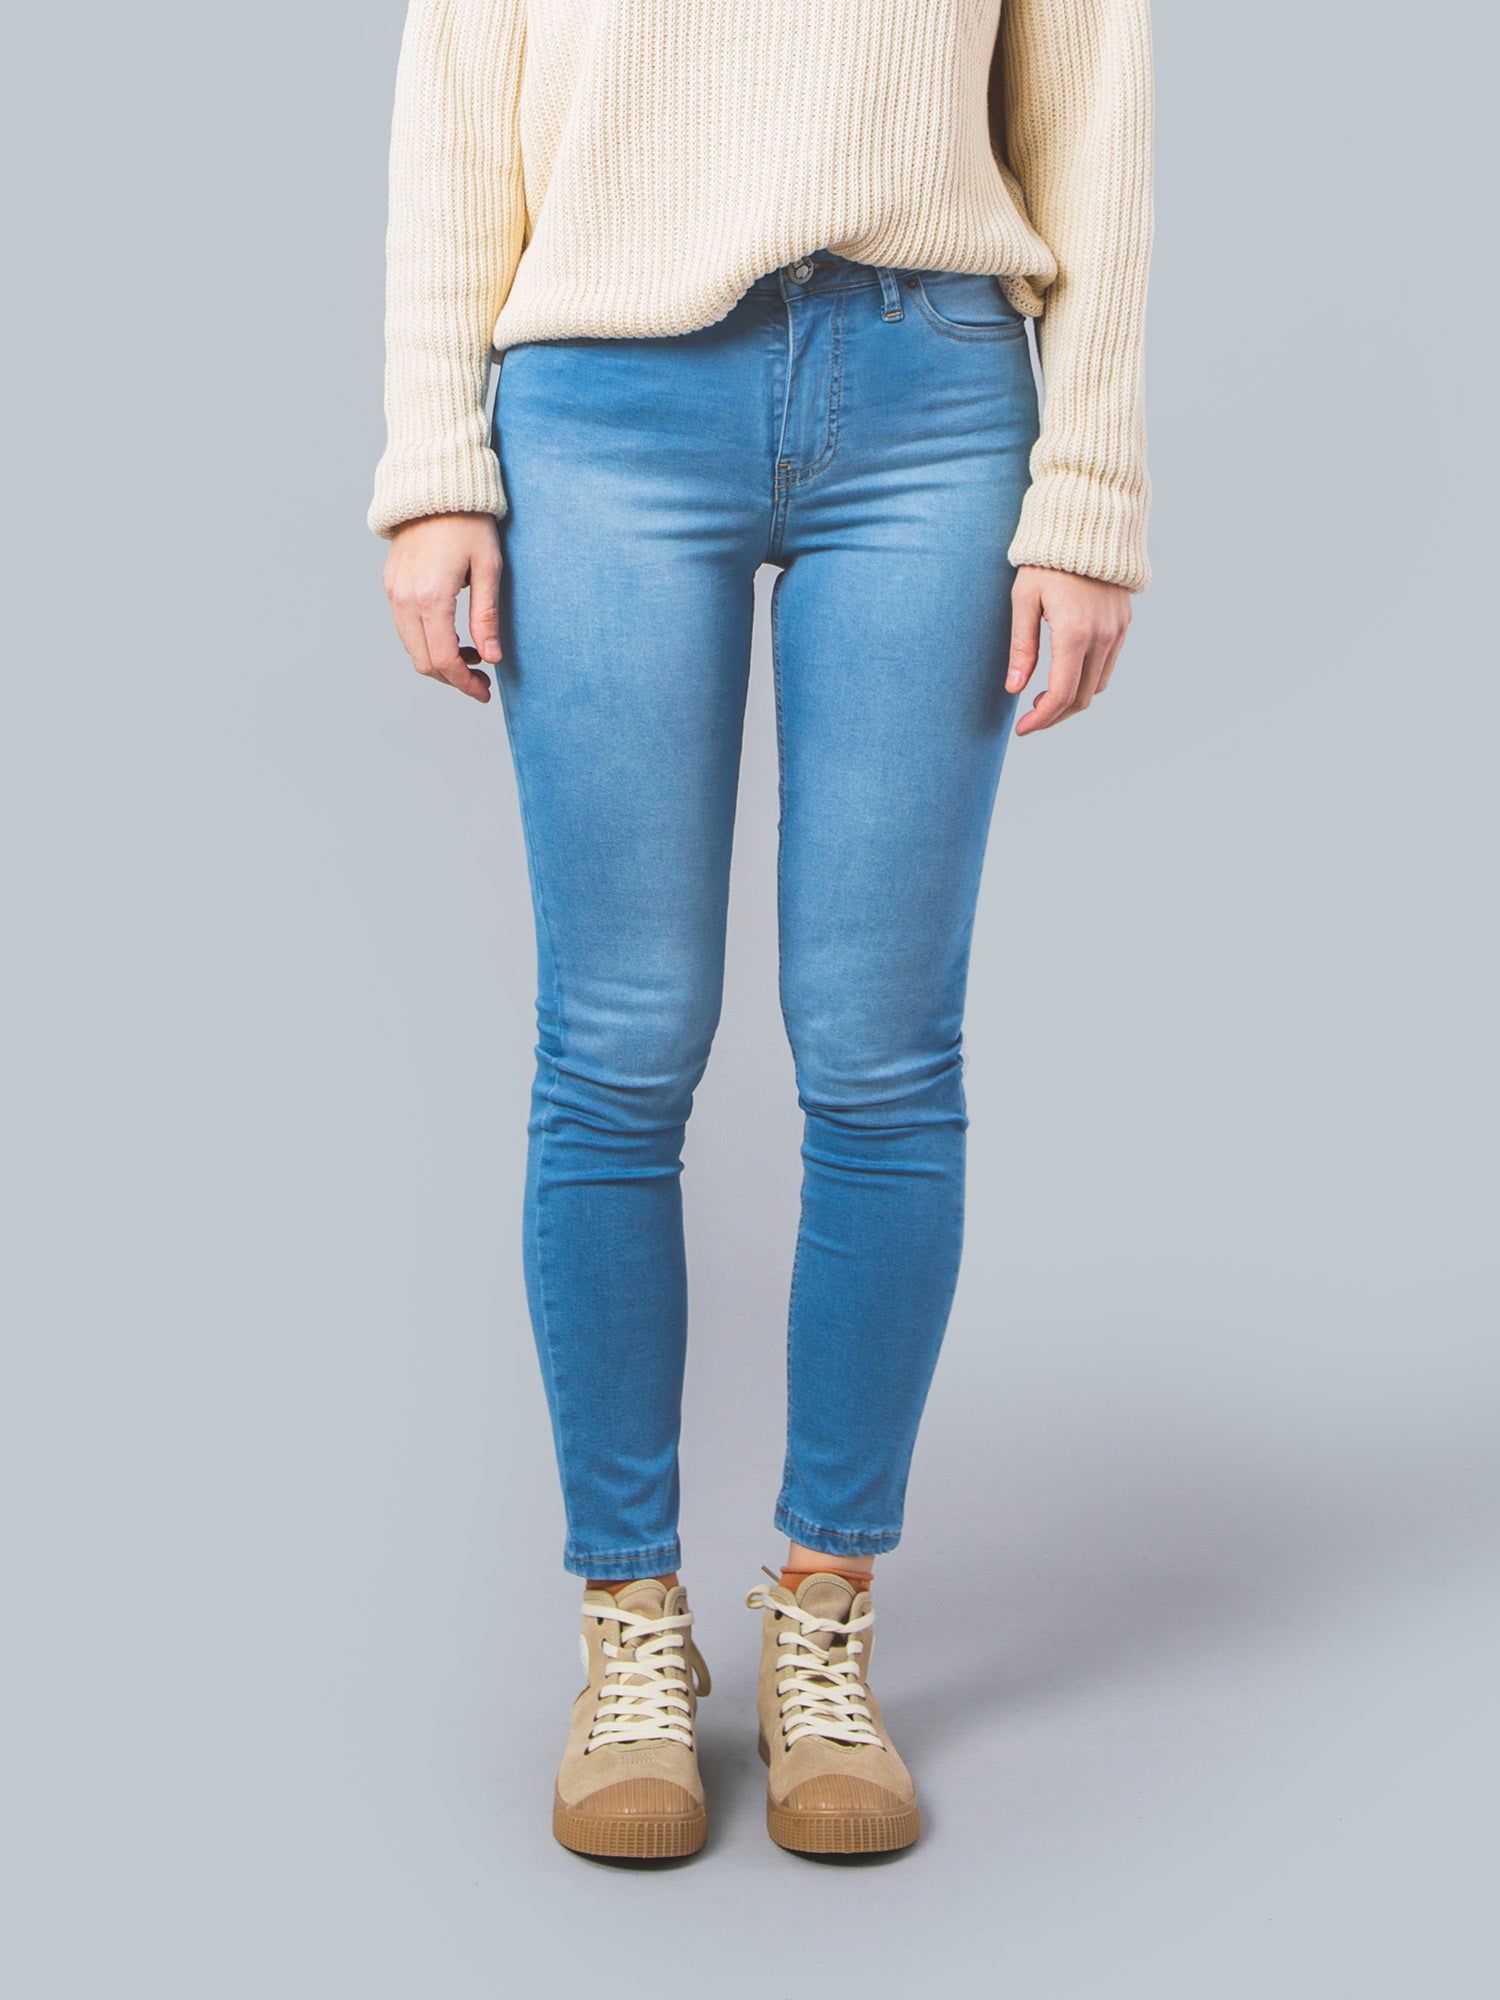 Jeans Skinny, pantalones vaqueros pitillo para mujer Capitan Denim –  capitandenim